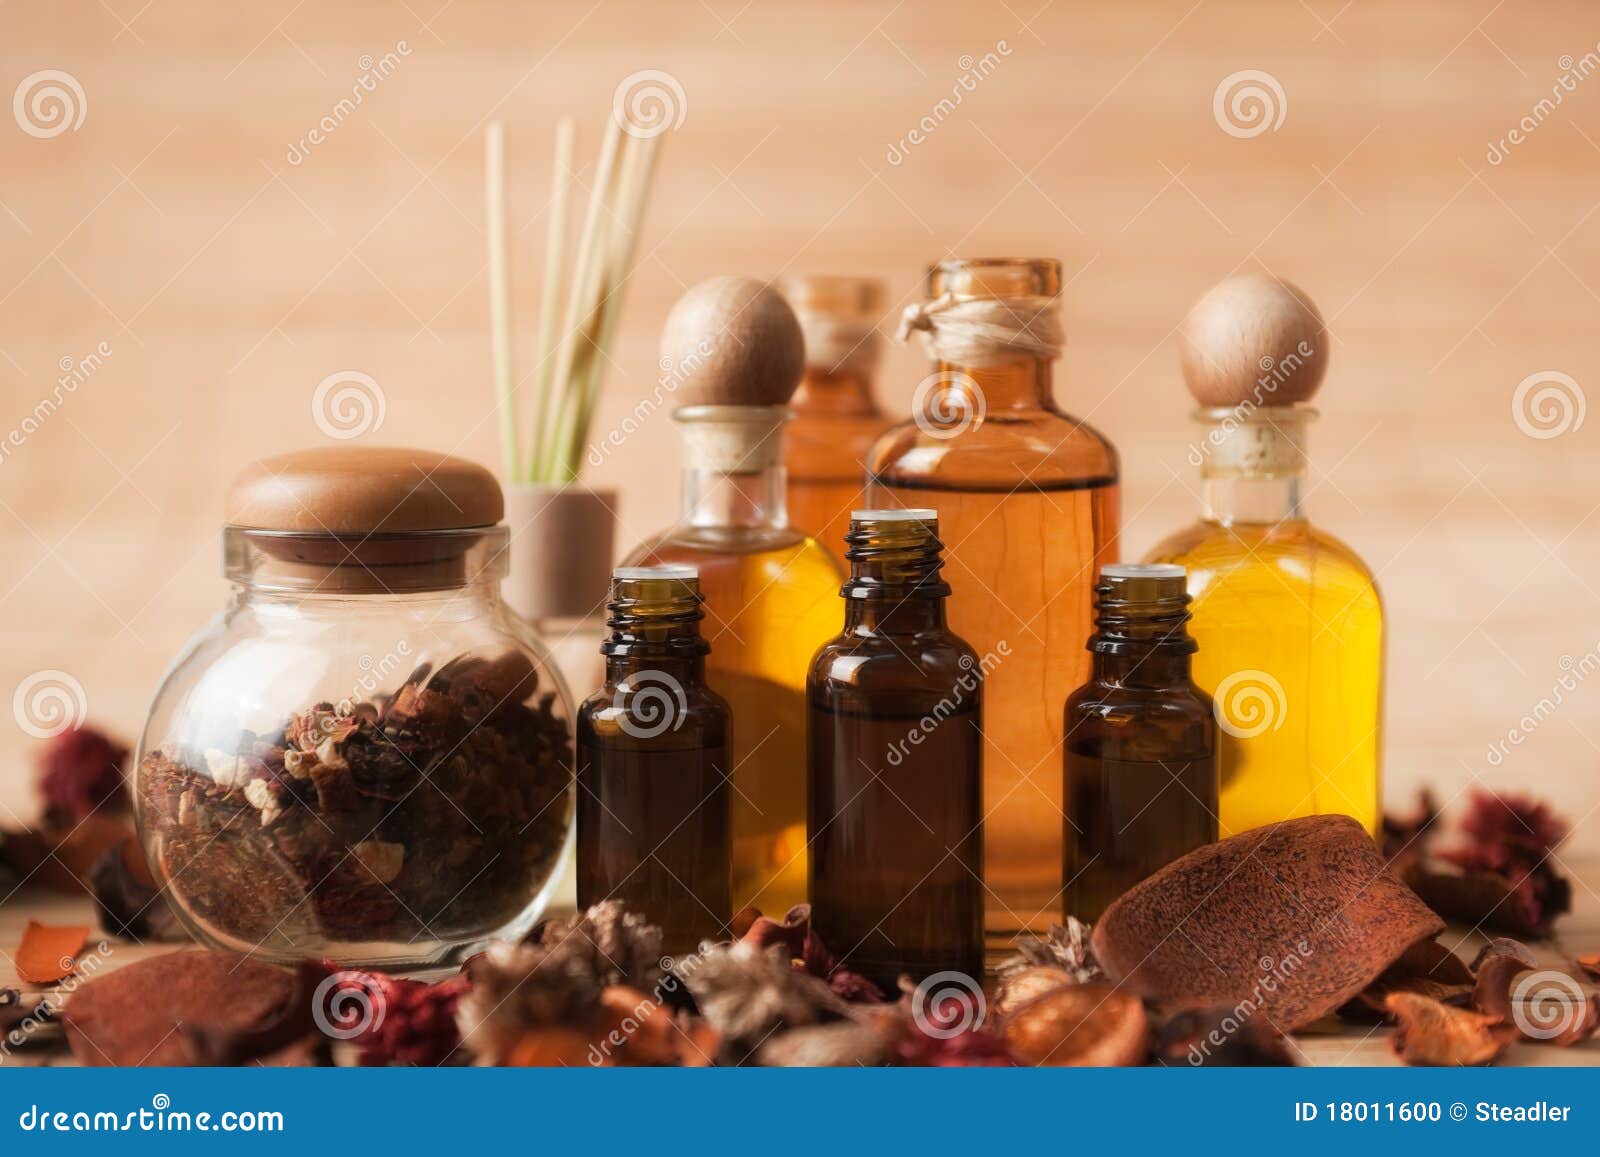 aromatherapy supplies